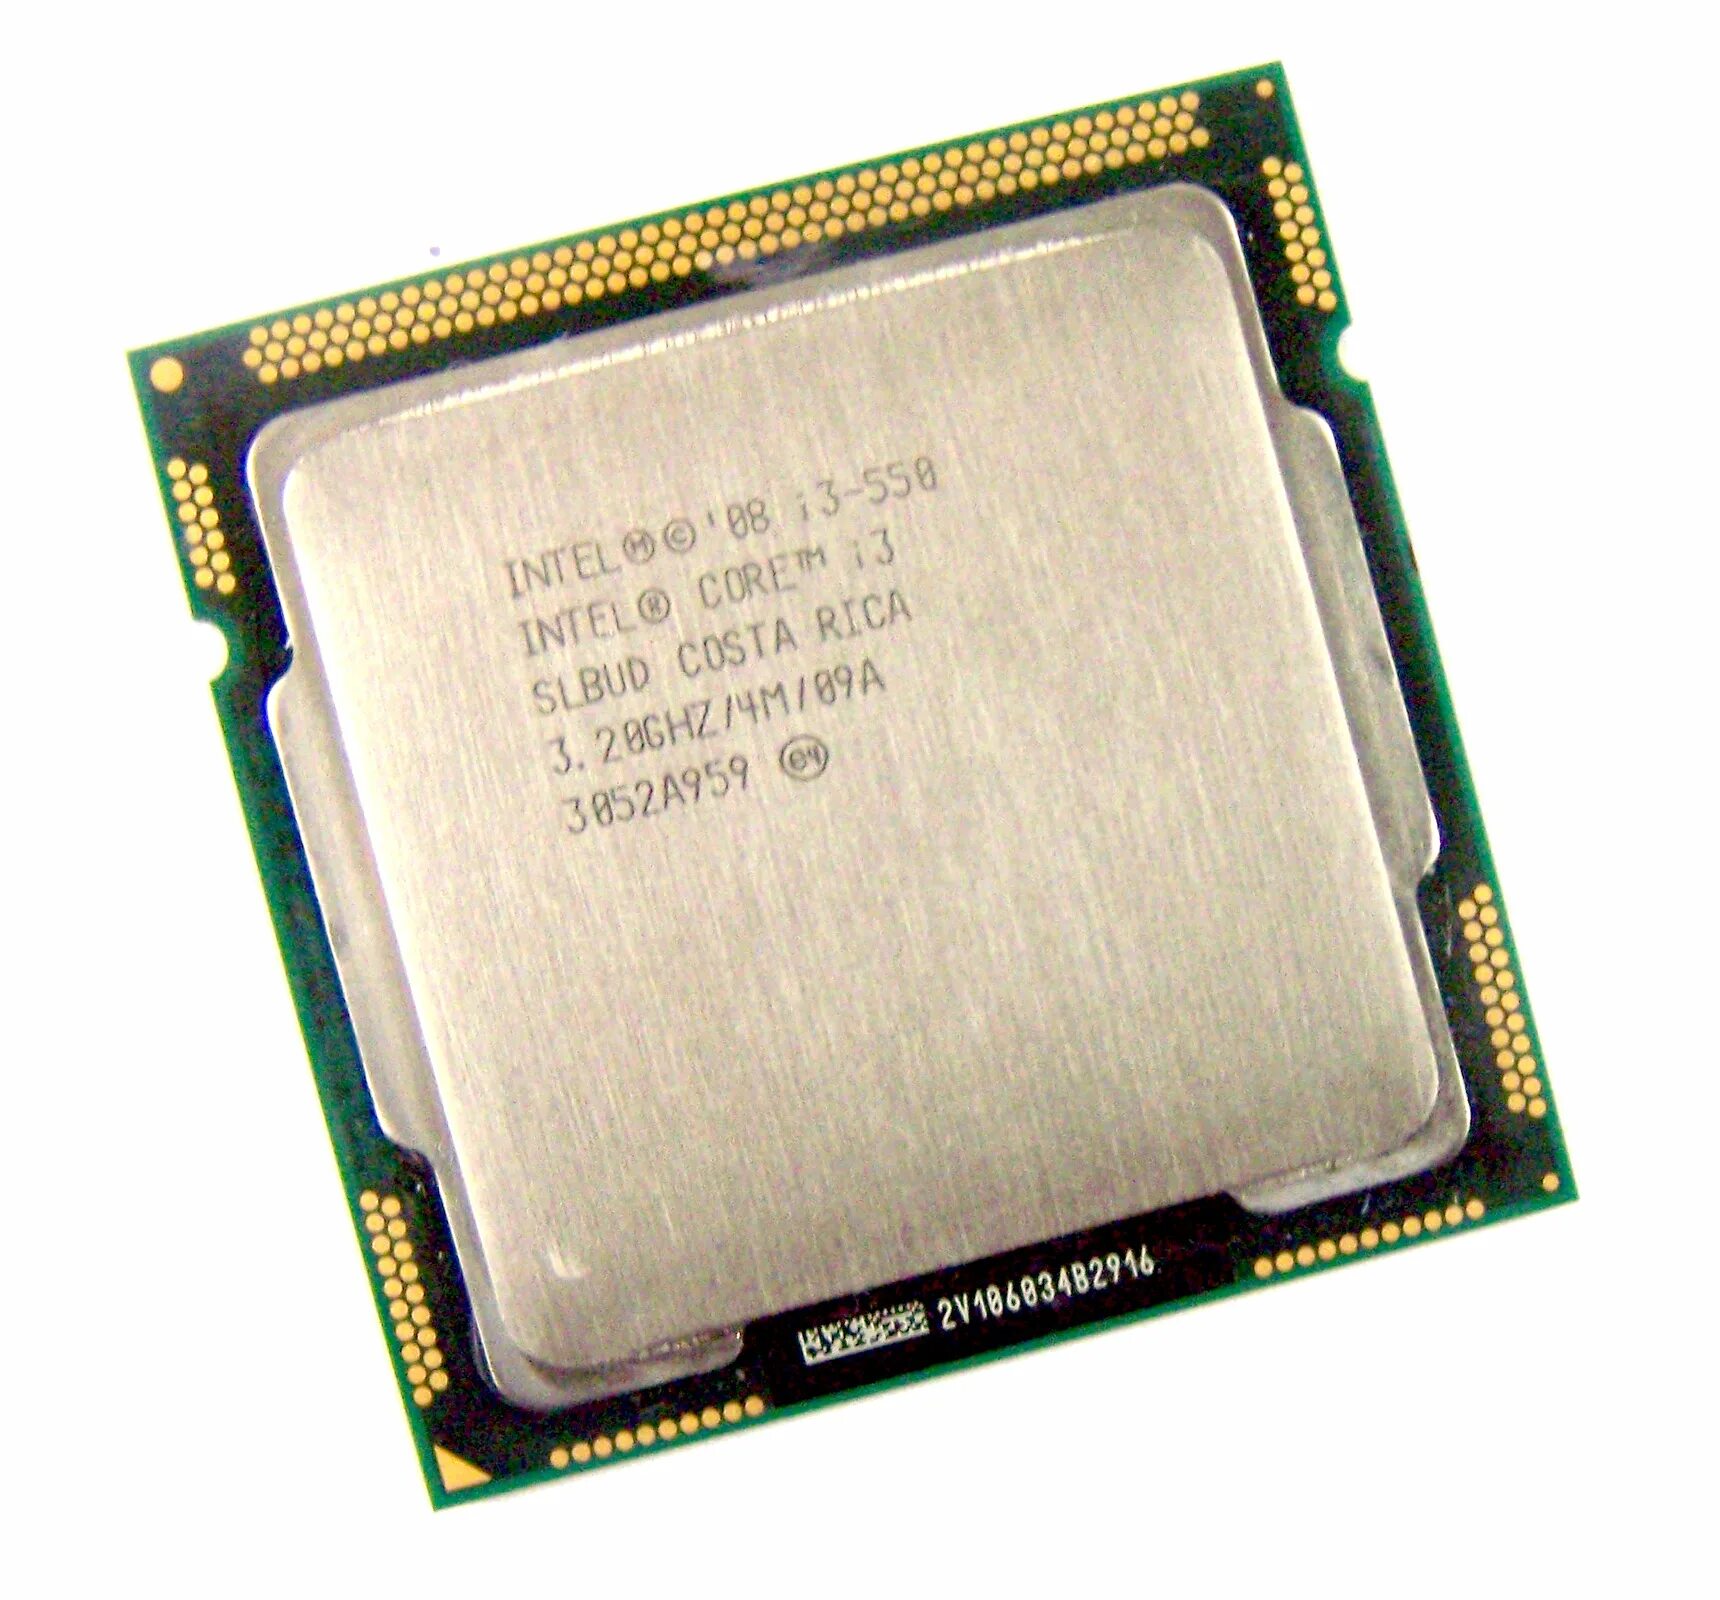 Интел кор i3 550. Процессор Intel Core i3 - 540,550. Intel Core i3 550 3.20GHZ. Процессор Intel Core i3 530.